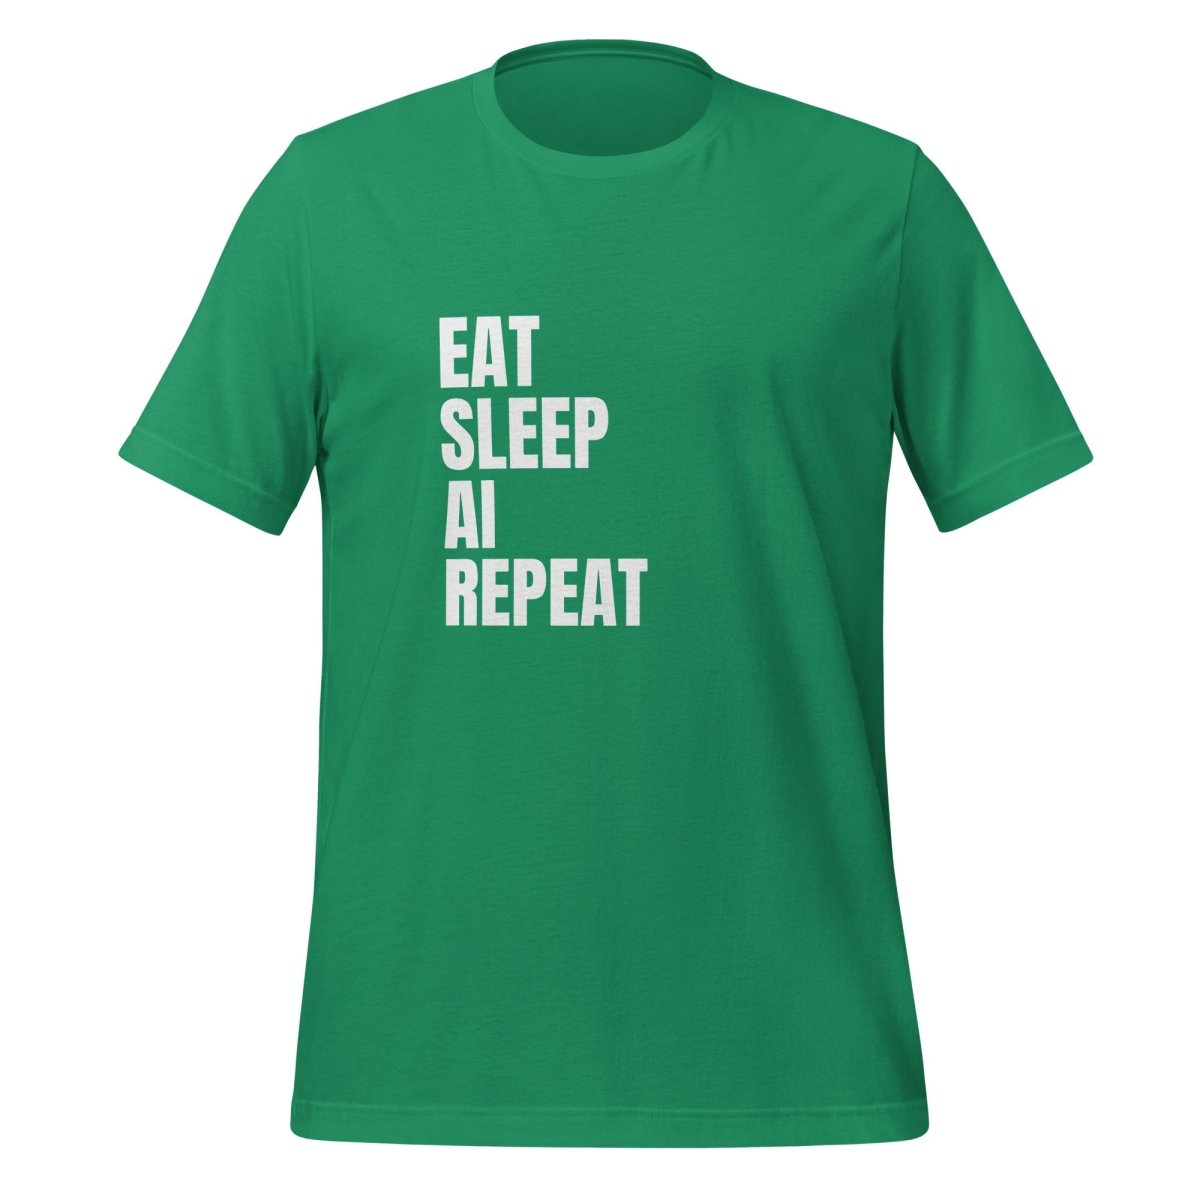 EAT SLEEP AI REPEAT T - Shirt 1 (unisex) - Kelly - AI Store